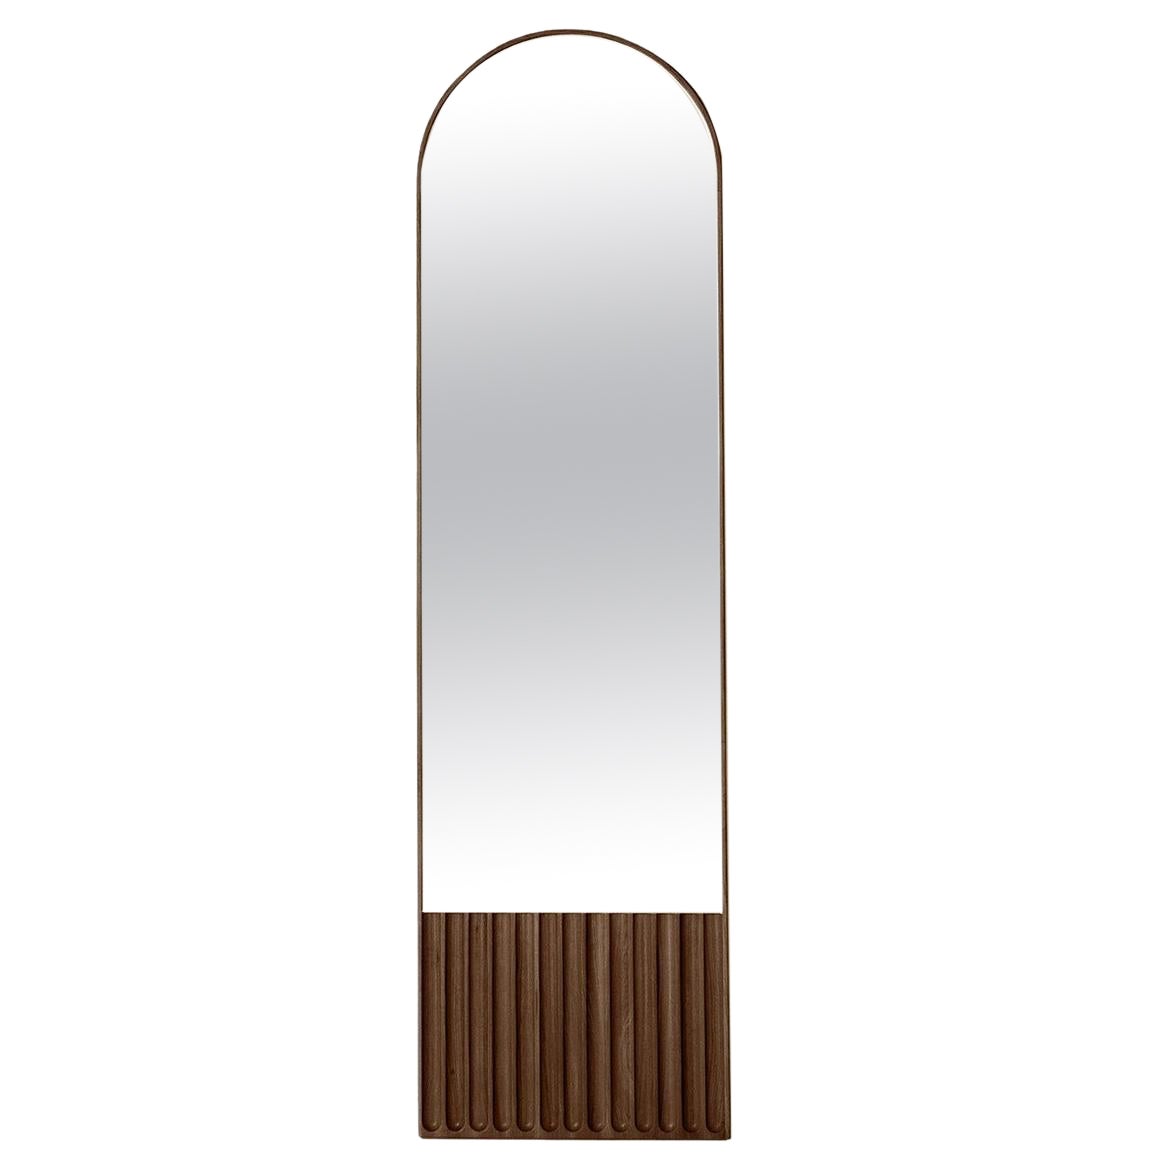 Tutto Sesto Solid Wood Oval Mirror, Ash in Brown Finish, Contemporary For Sale